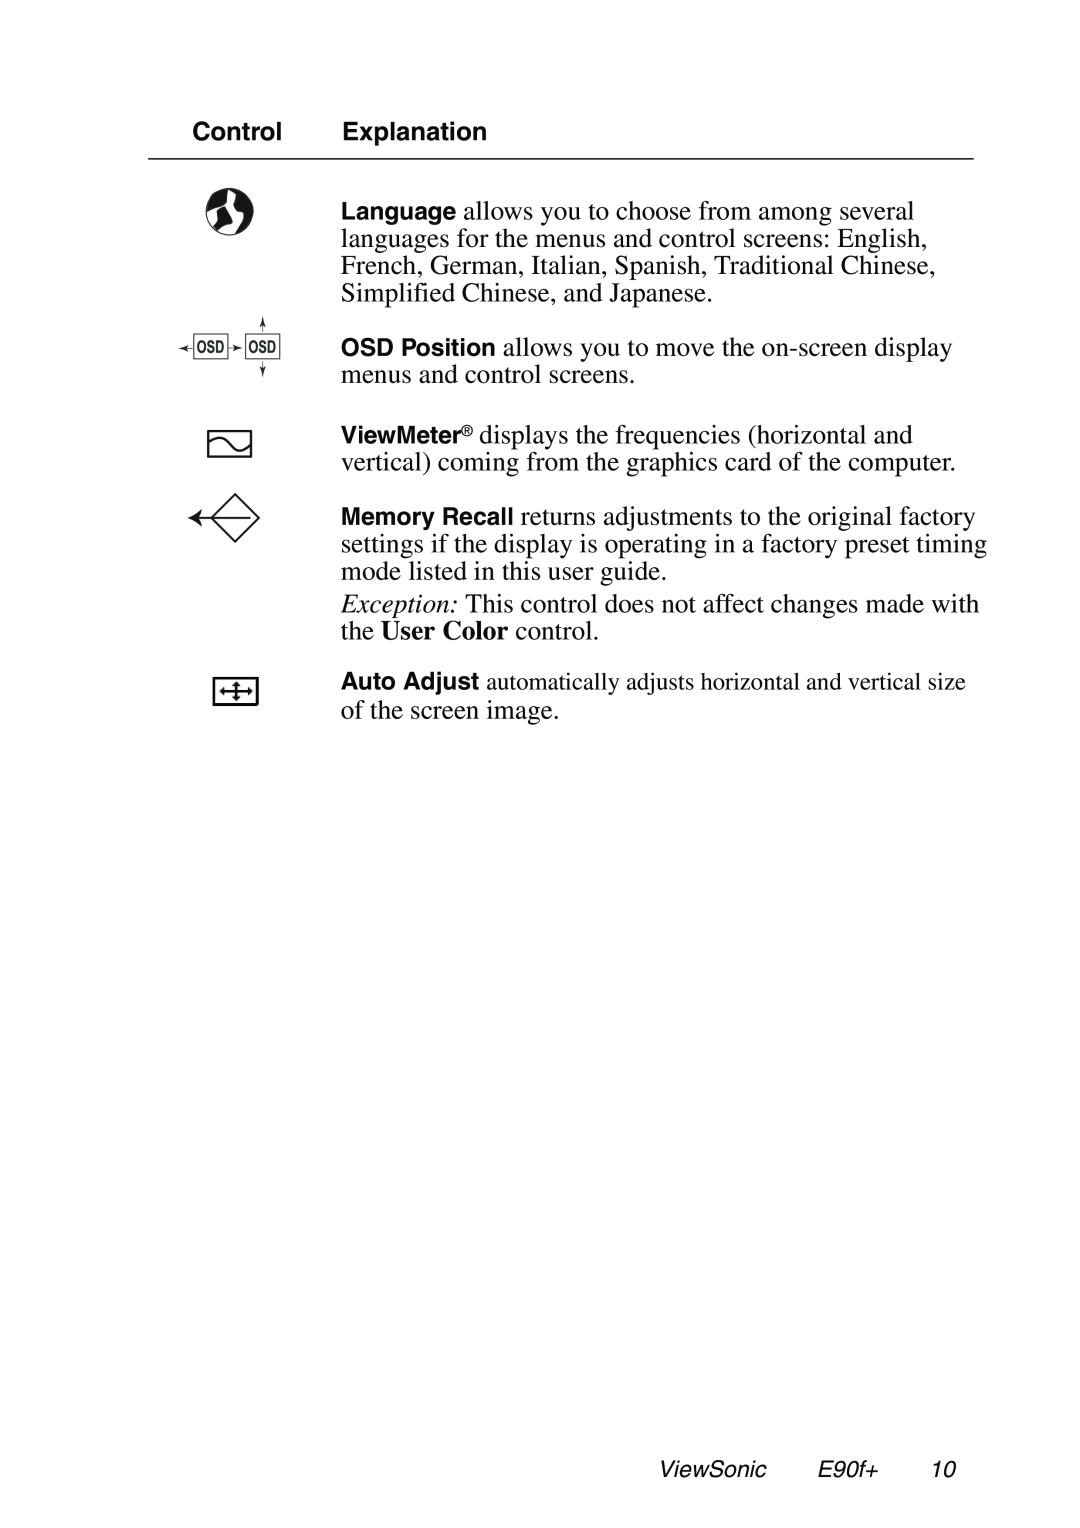 ViewSonic E90f+ manual of the screen image 